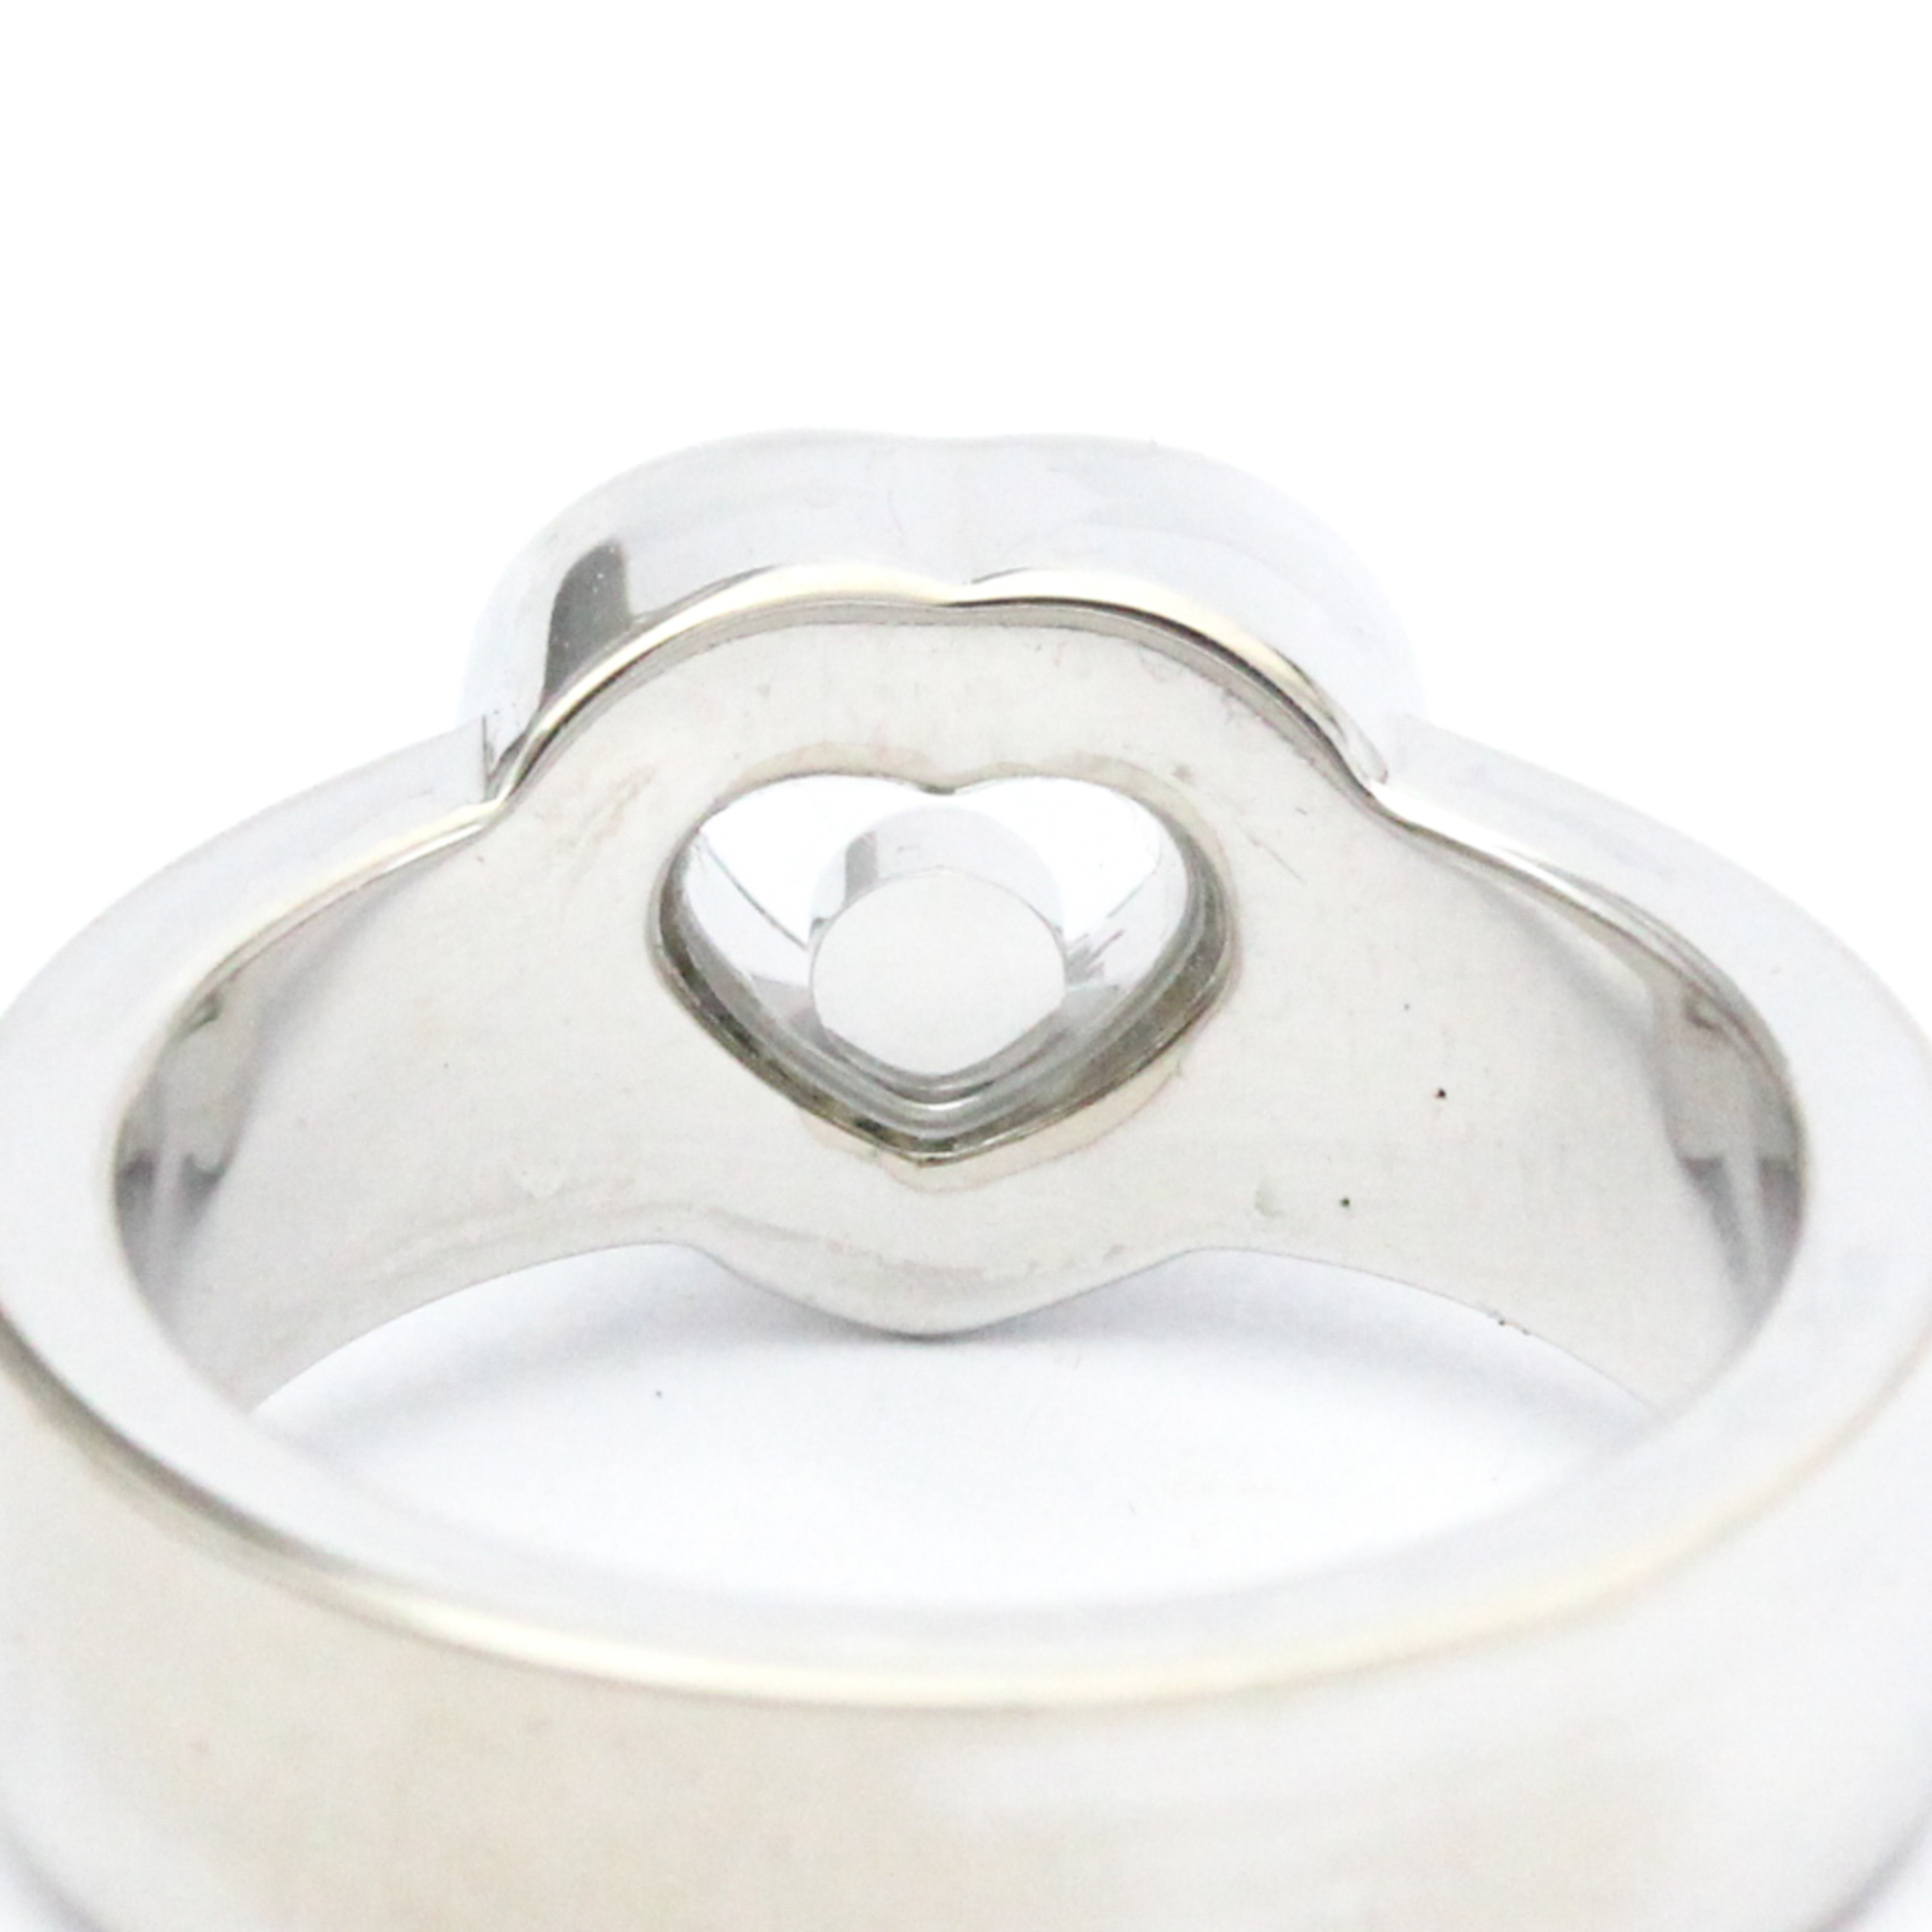 Chopard Happy Diamonds Heart 82 / 2897-20 White Gold (18K) Fashion Diamond Band Ring Silver